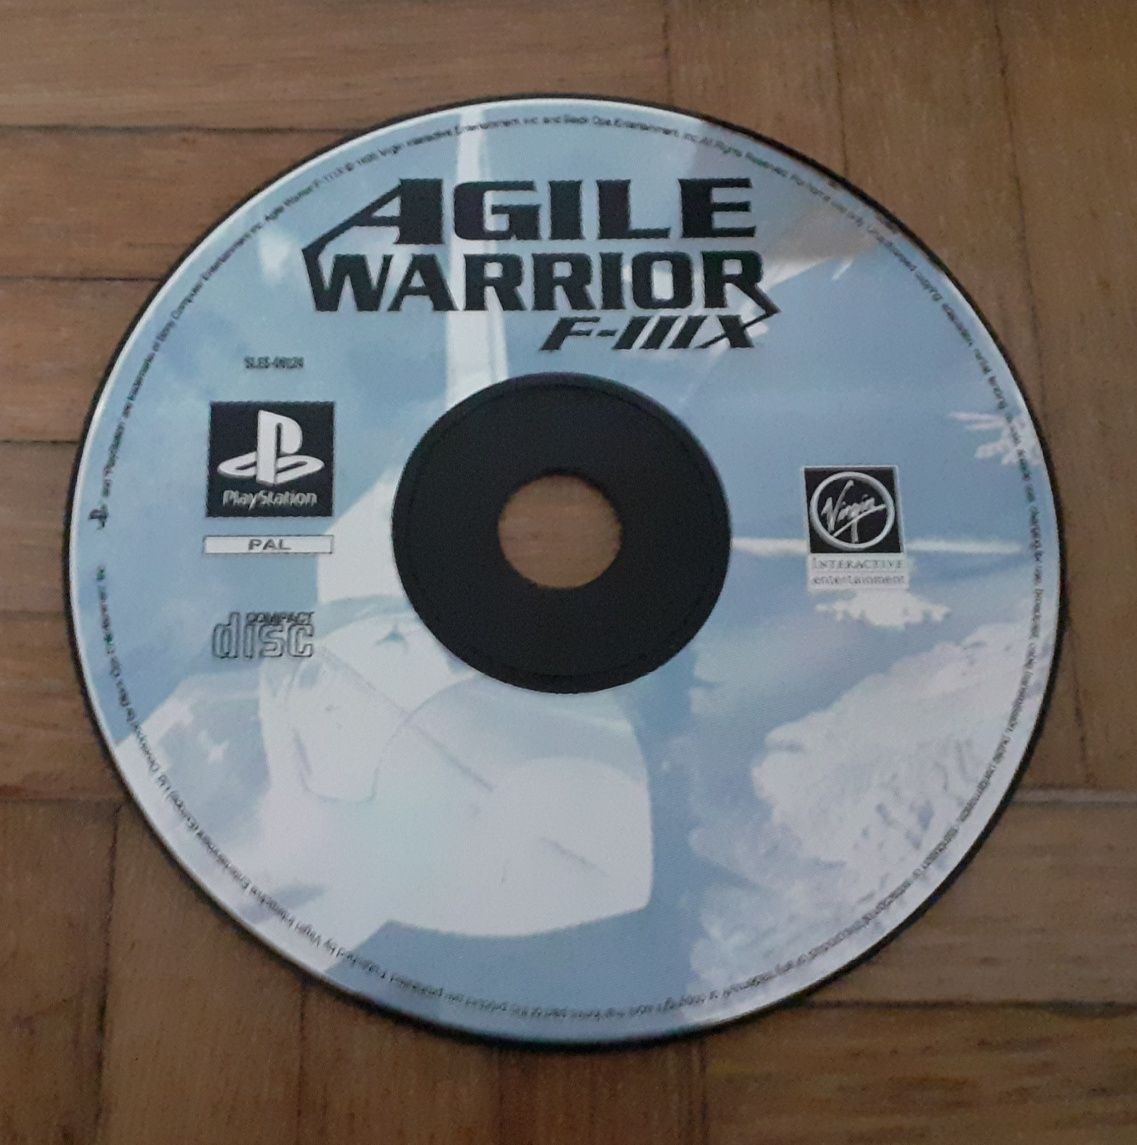 Agile Warrior Filix - Gra na PSX